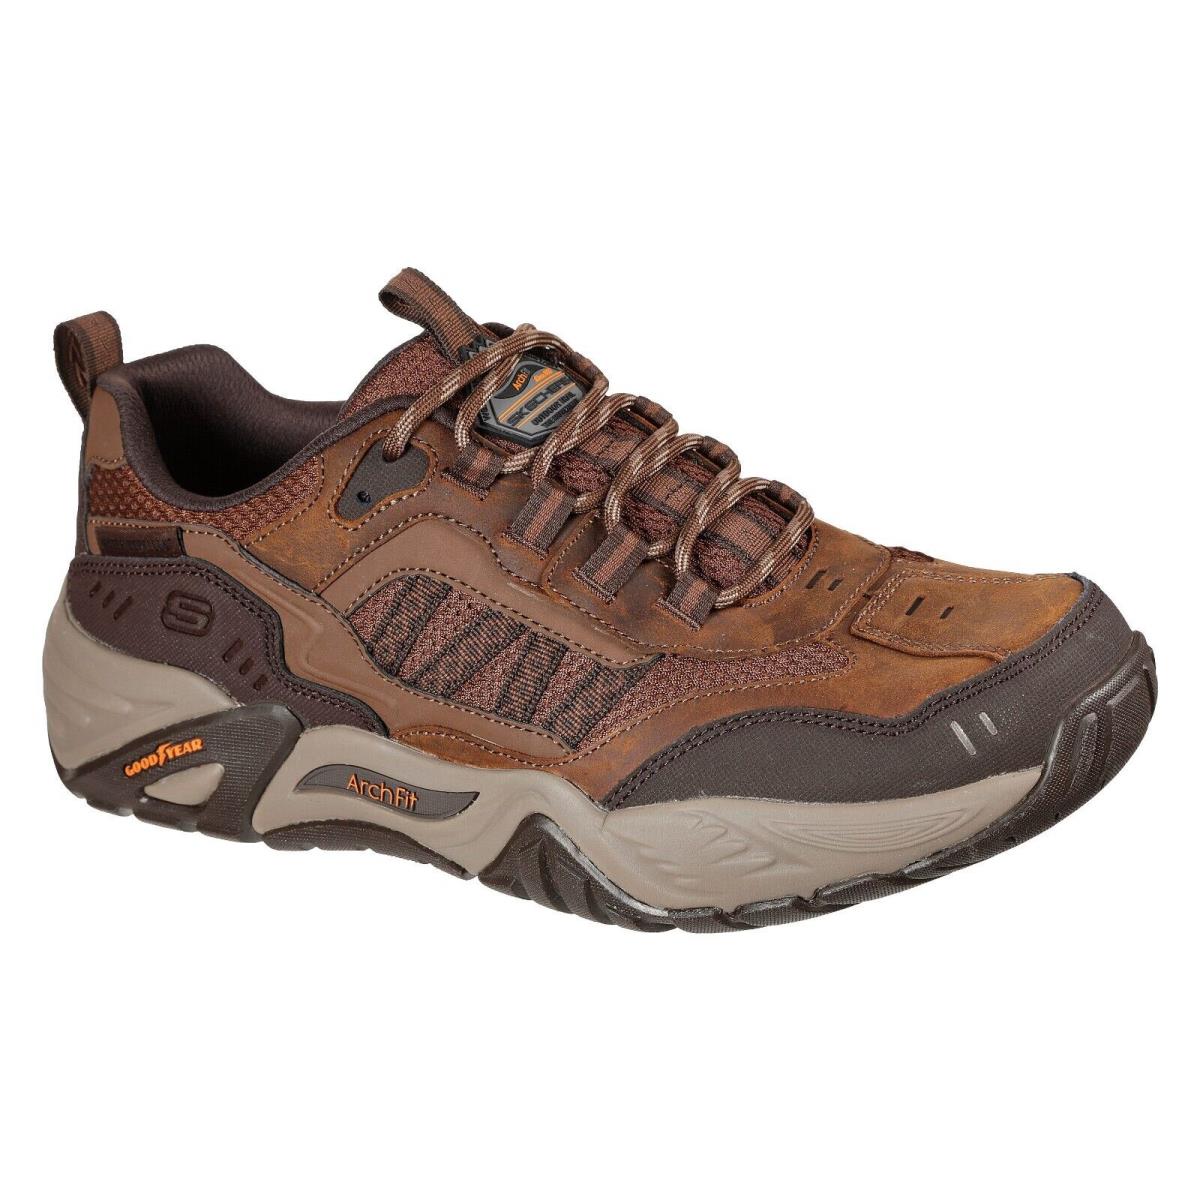 Men Skechers Arch Fit Recon Jericko Hiking Shoes 204412 /cdb Multi Sizes DK Brn